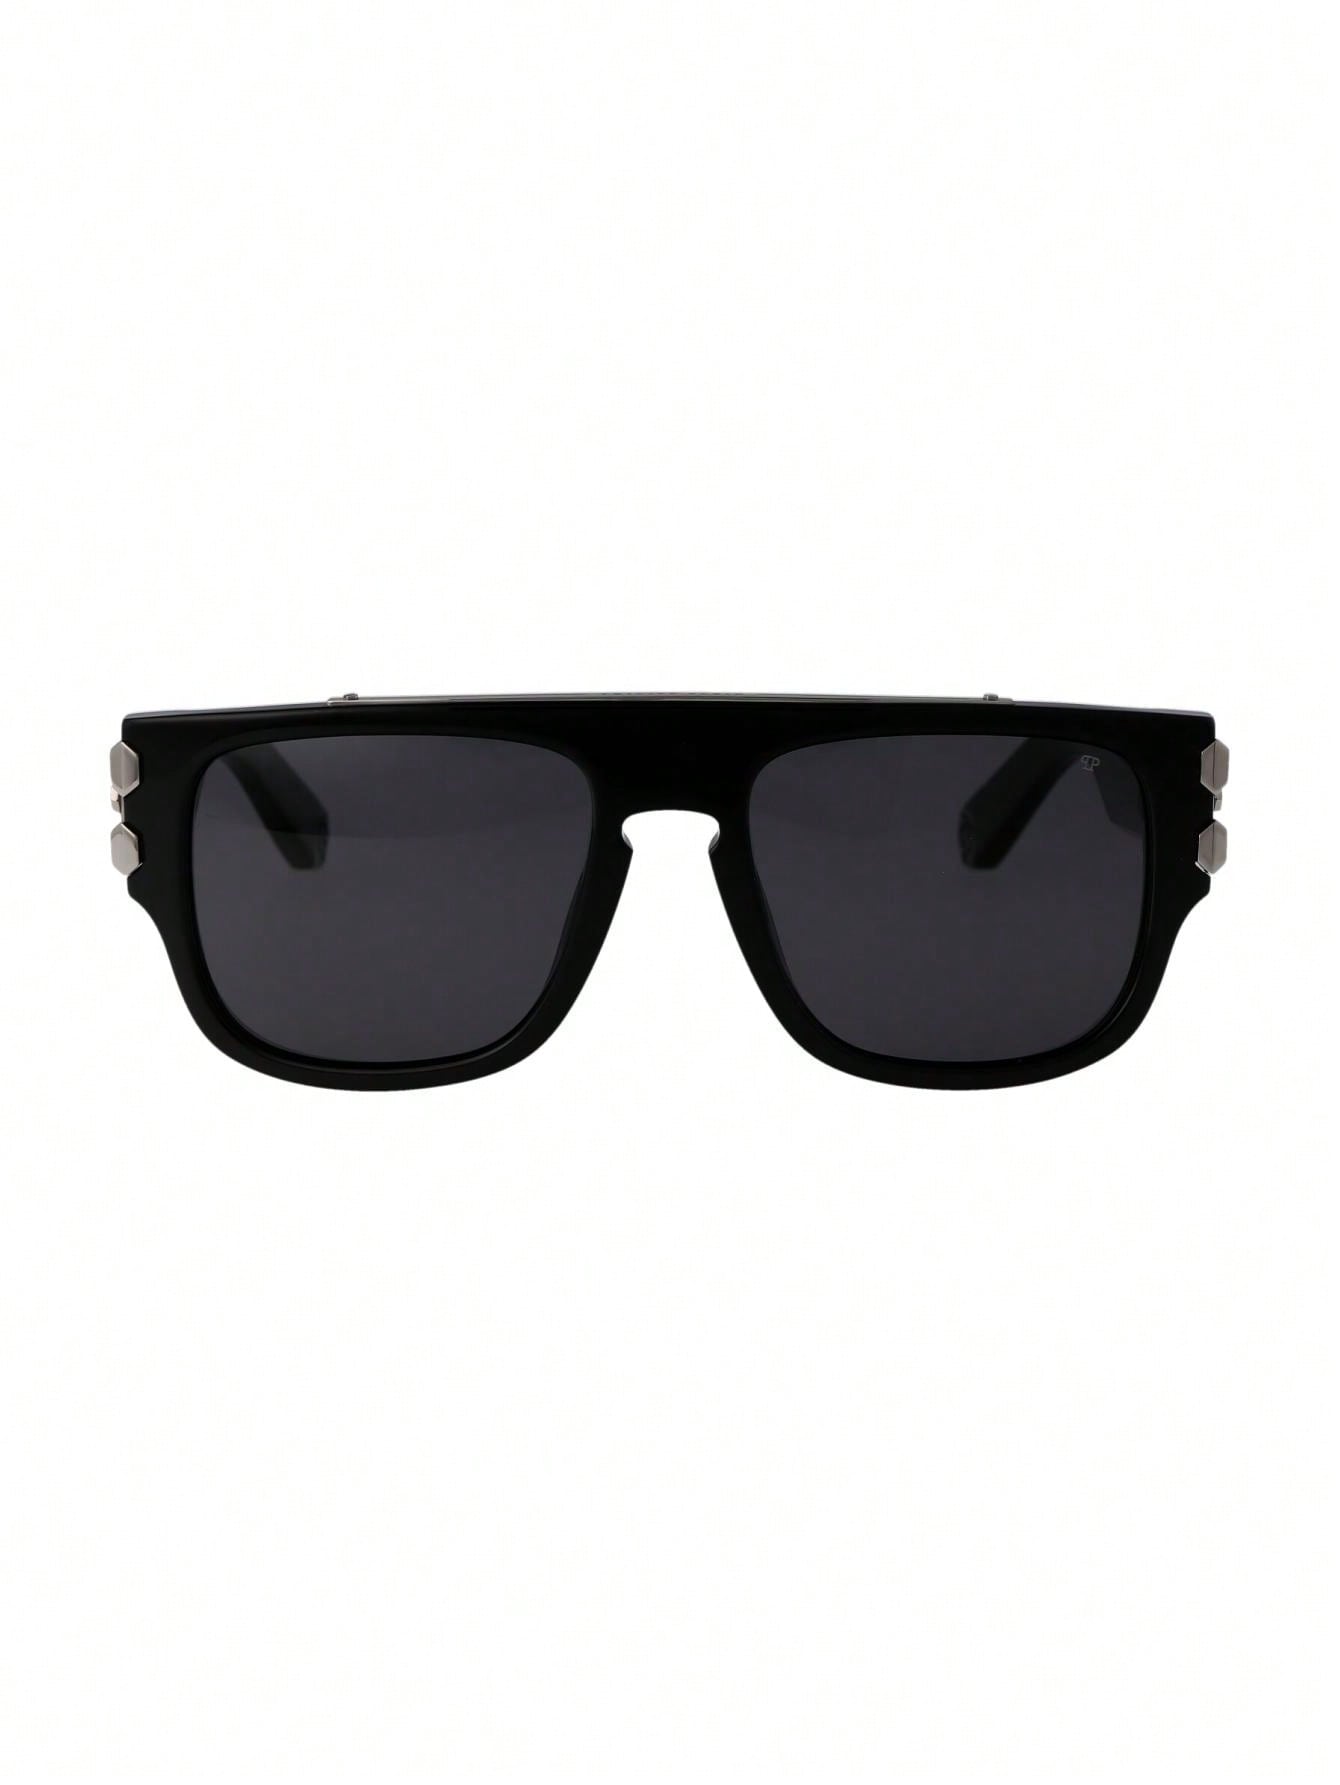 Мужские солнцезащитные очки Philipp Plein DECOR SPP011X0700, многоцветный солнцезащитные очки philipp plein 006m 890x